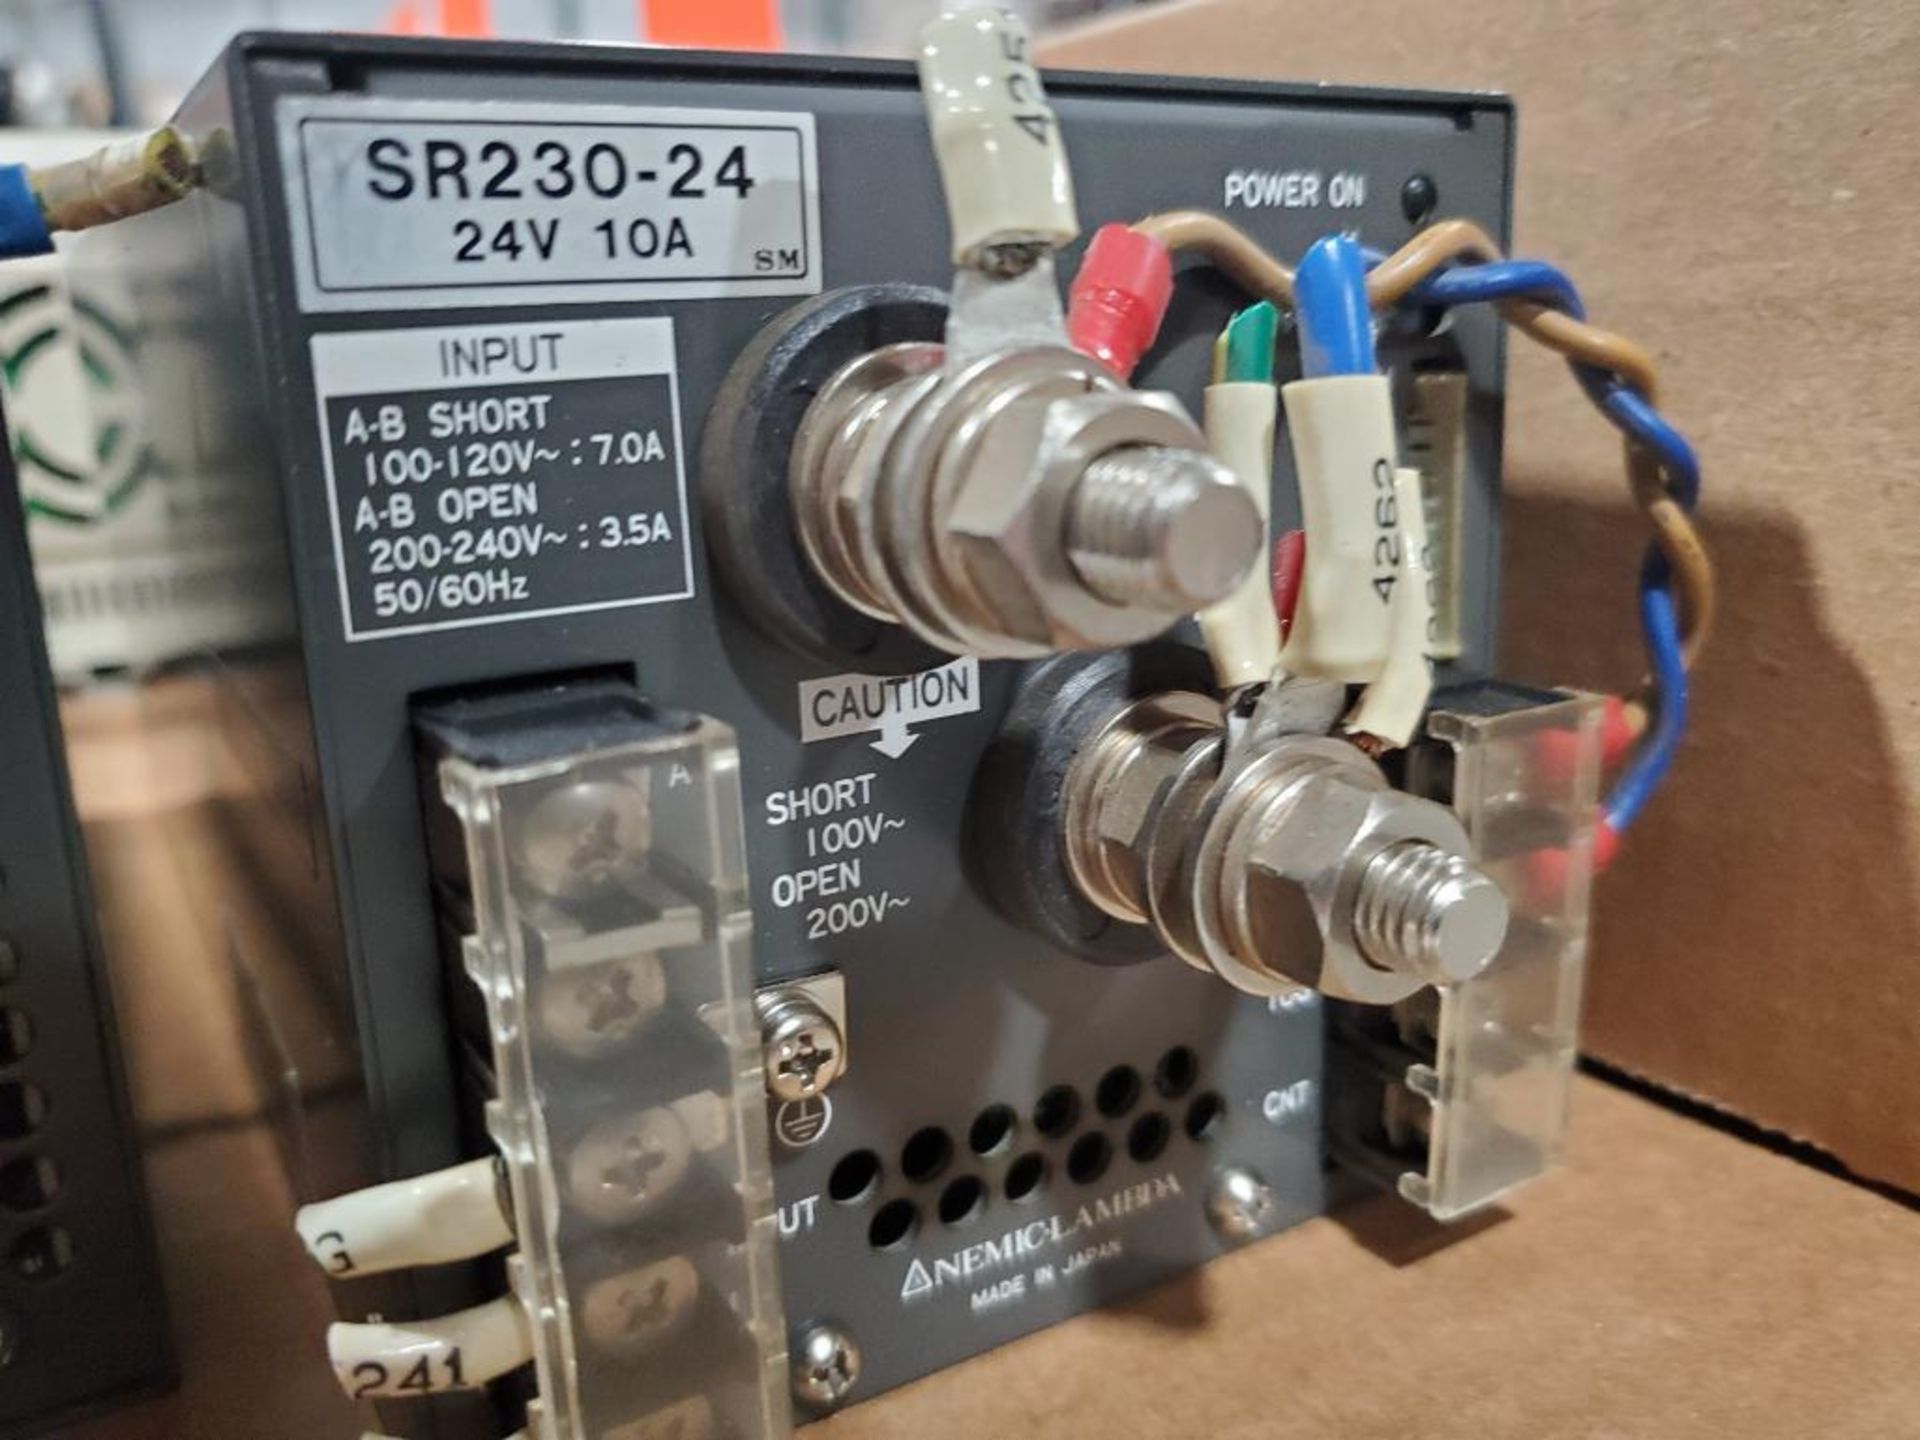 Qty 2 - Nemic - Lamda power supply. Part number SR230-24. - Image 3 of 6